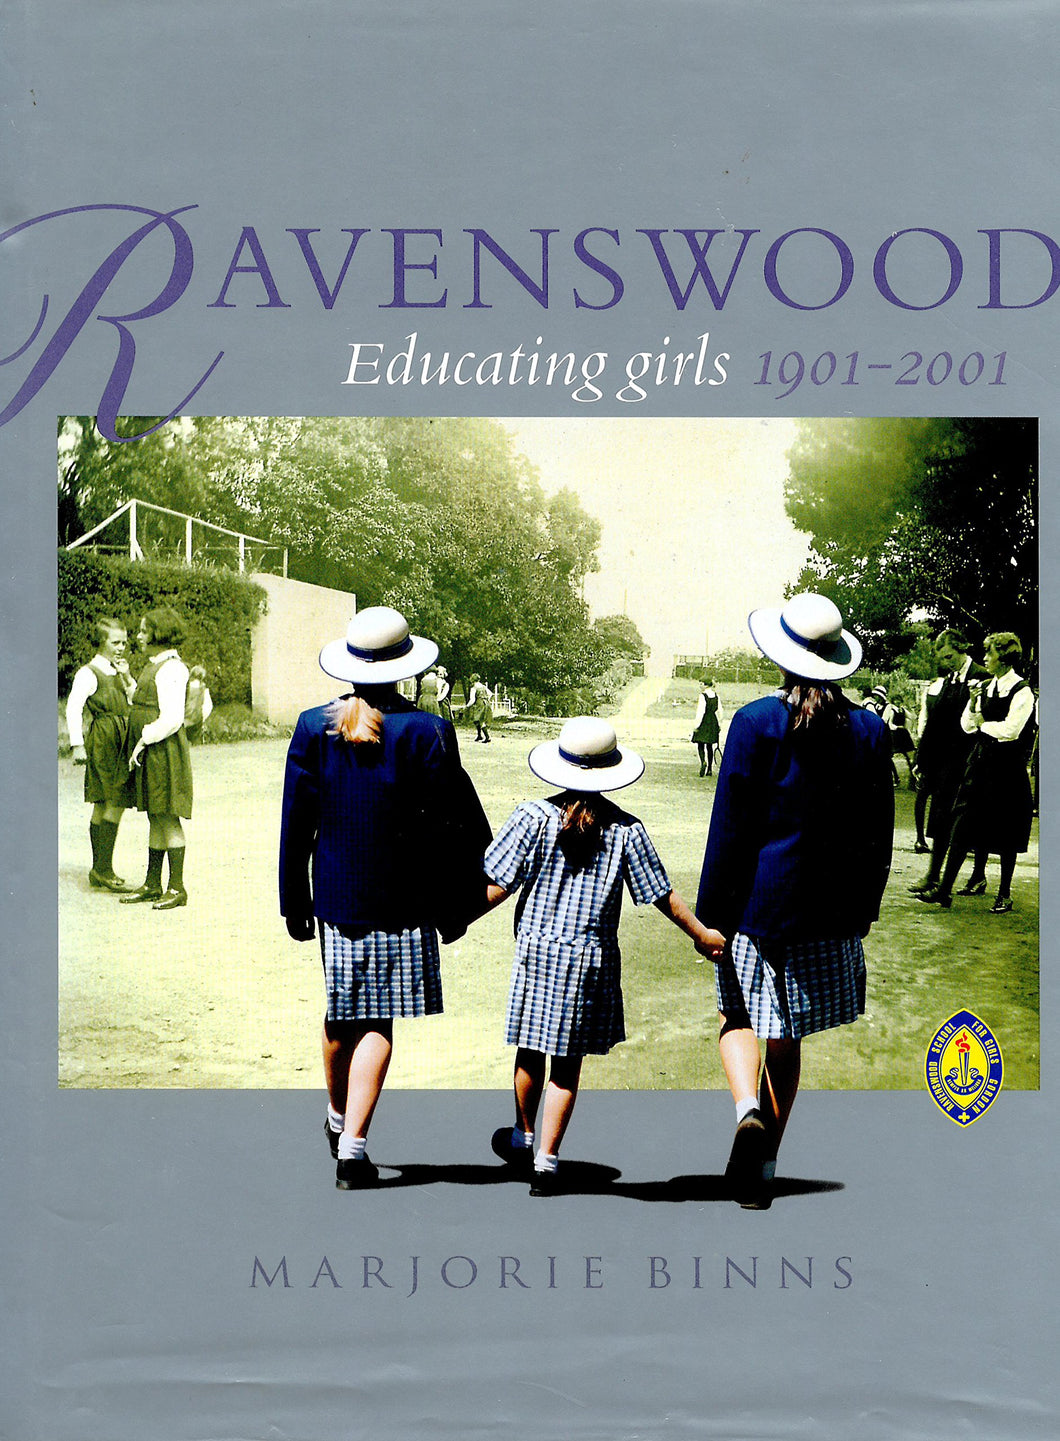 Ravenswood: Educating Girls 1901-2001